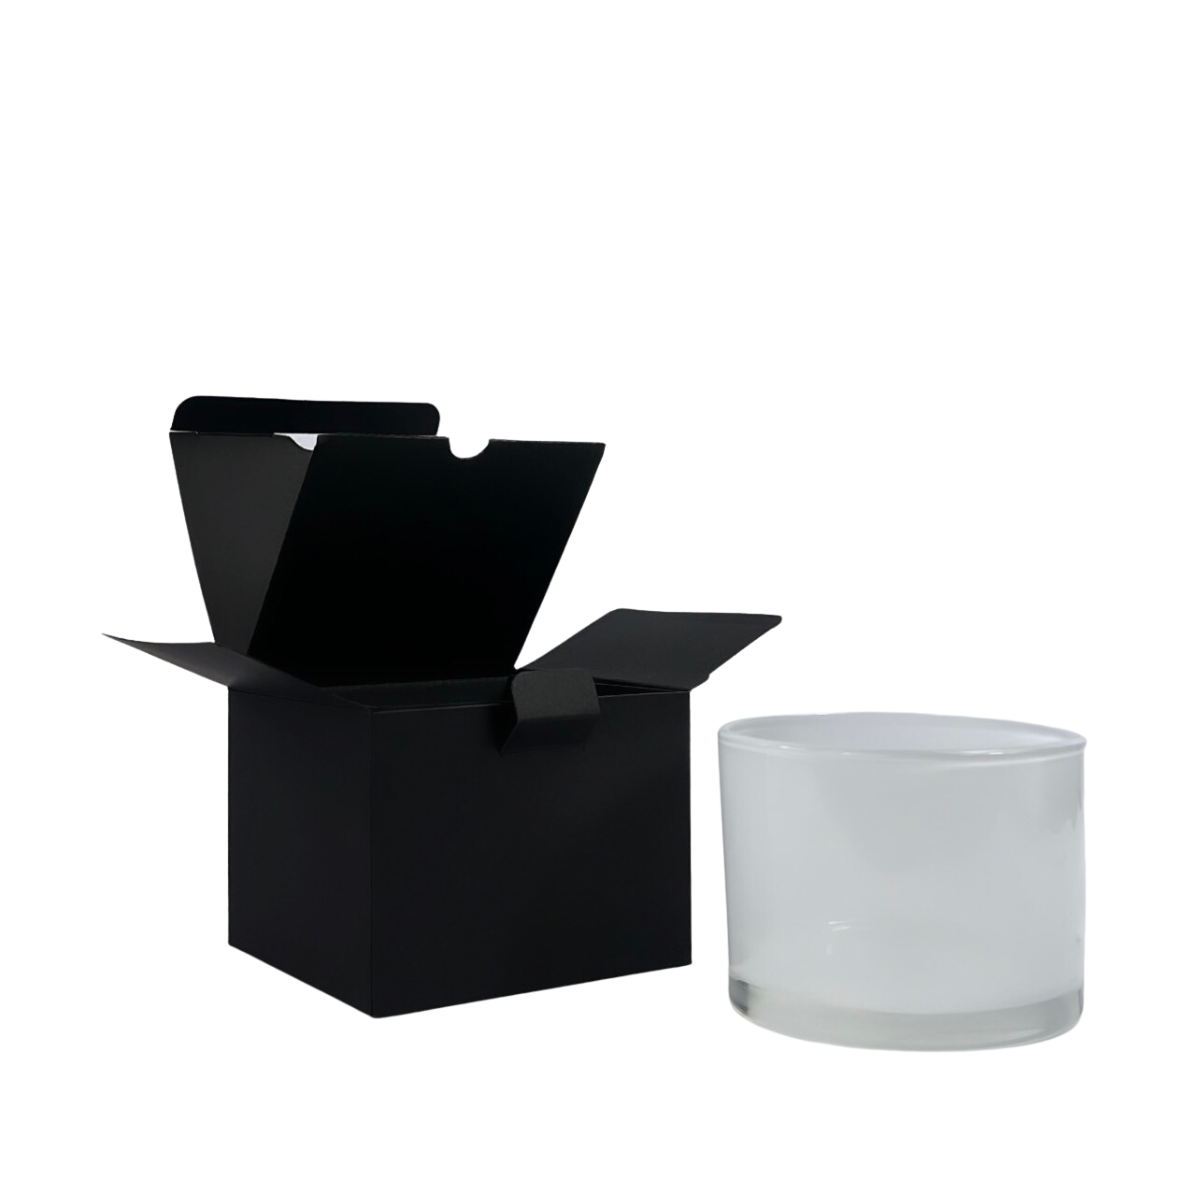 Bella candle box black with white jar